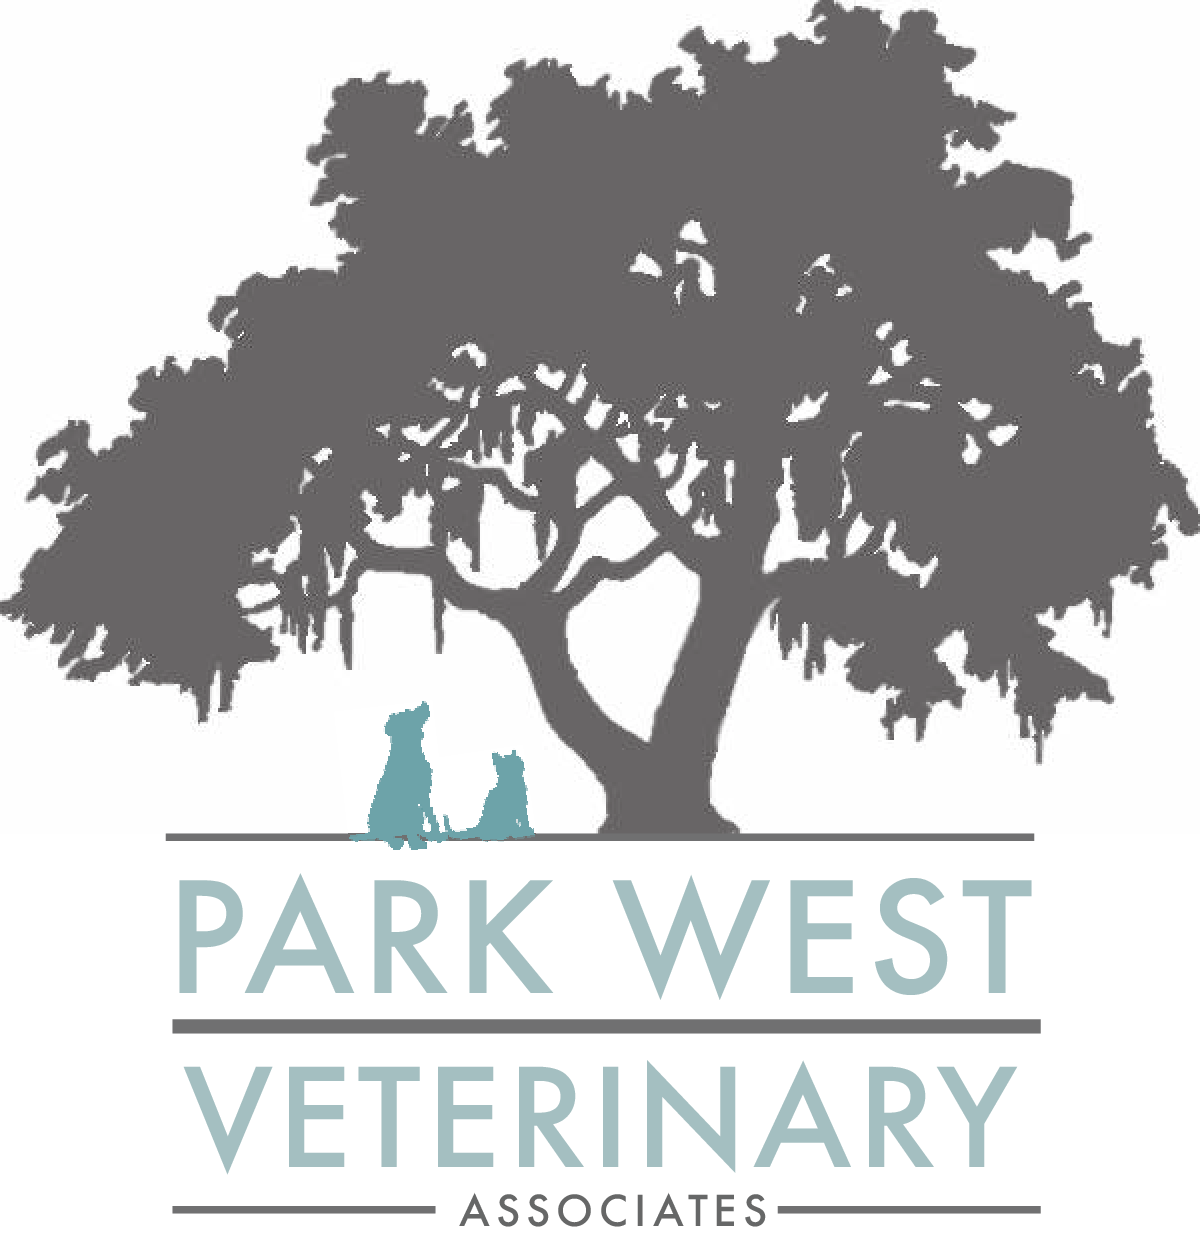 Park West Veterinary Associates